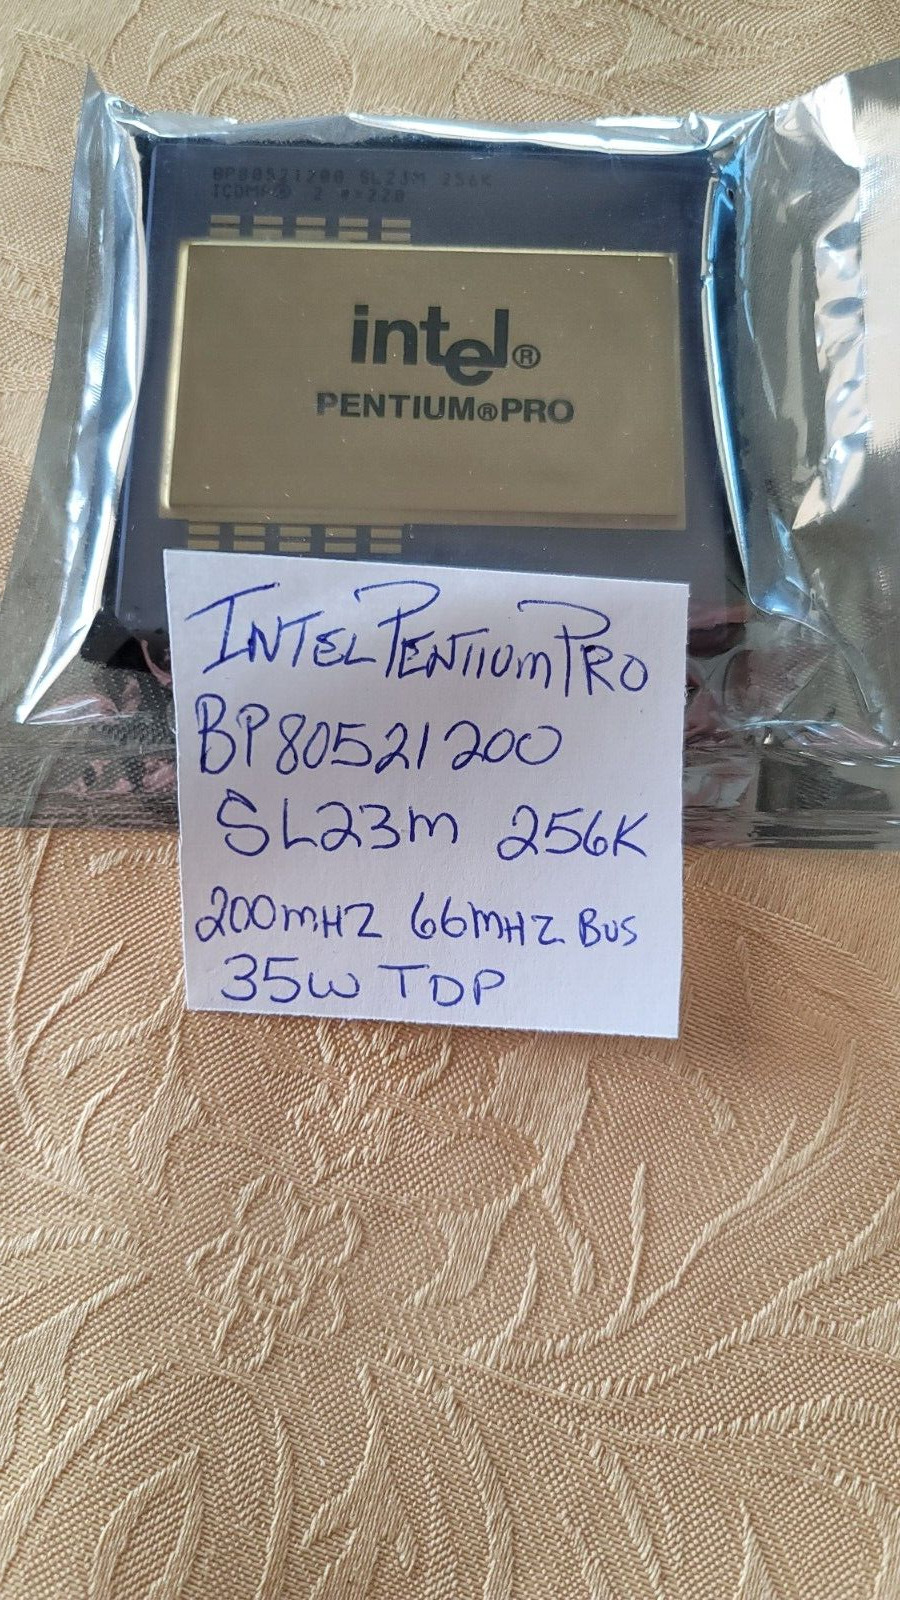 Vintage Intel Pentium Pro KB80521200 SL23M 256K Processor Collector or Gold